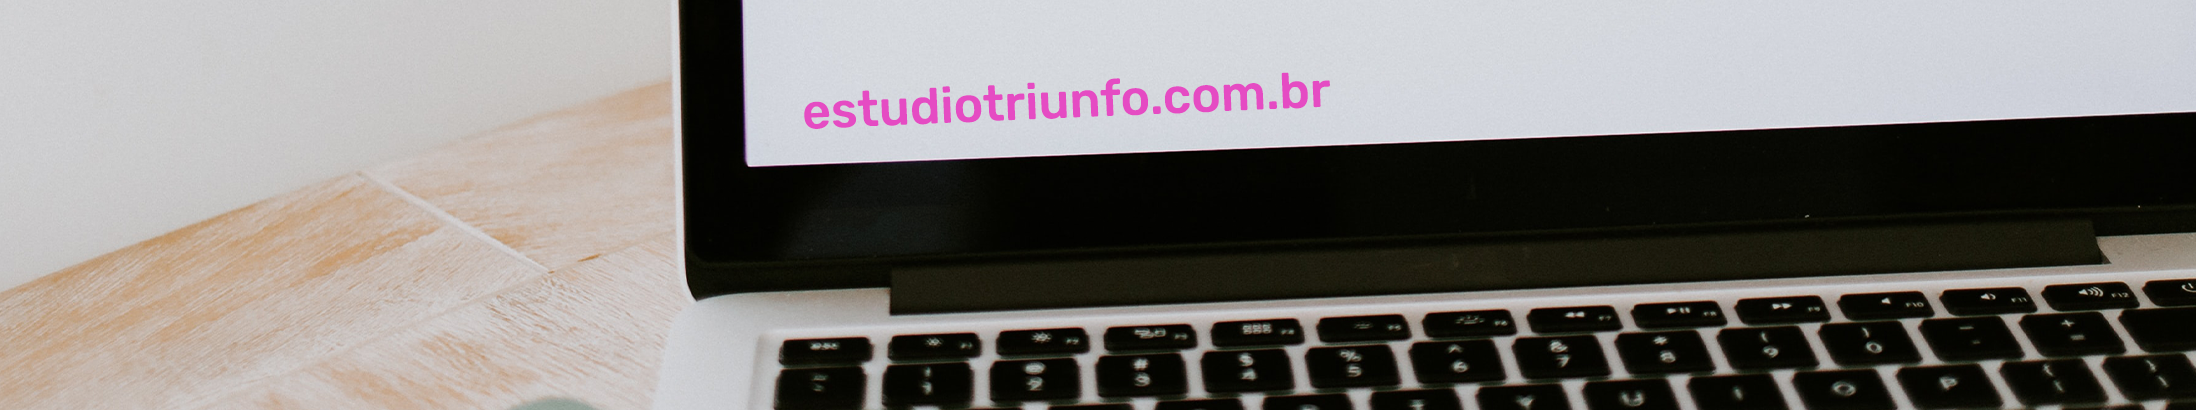 Triunfo Estudio Digitals profilbanner